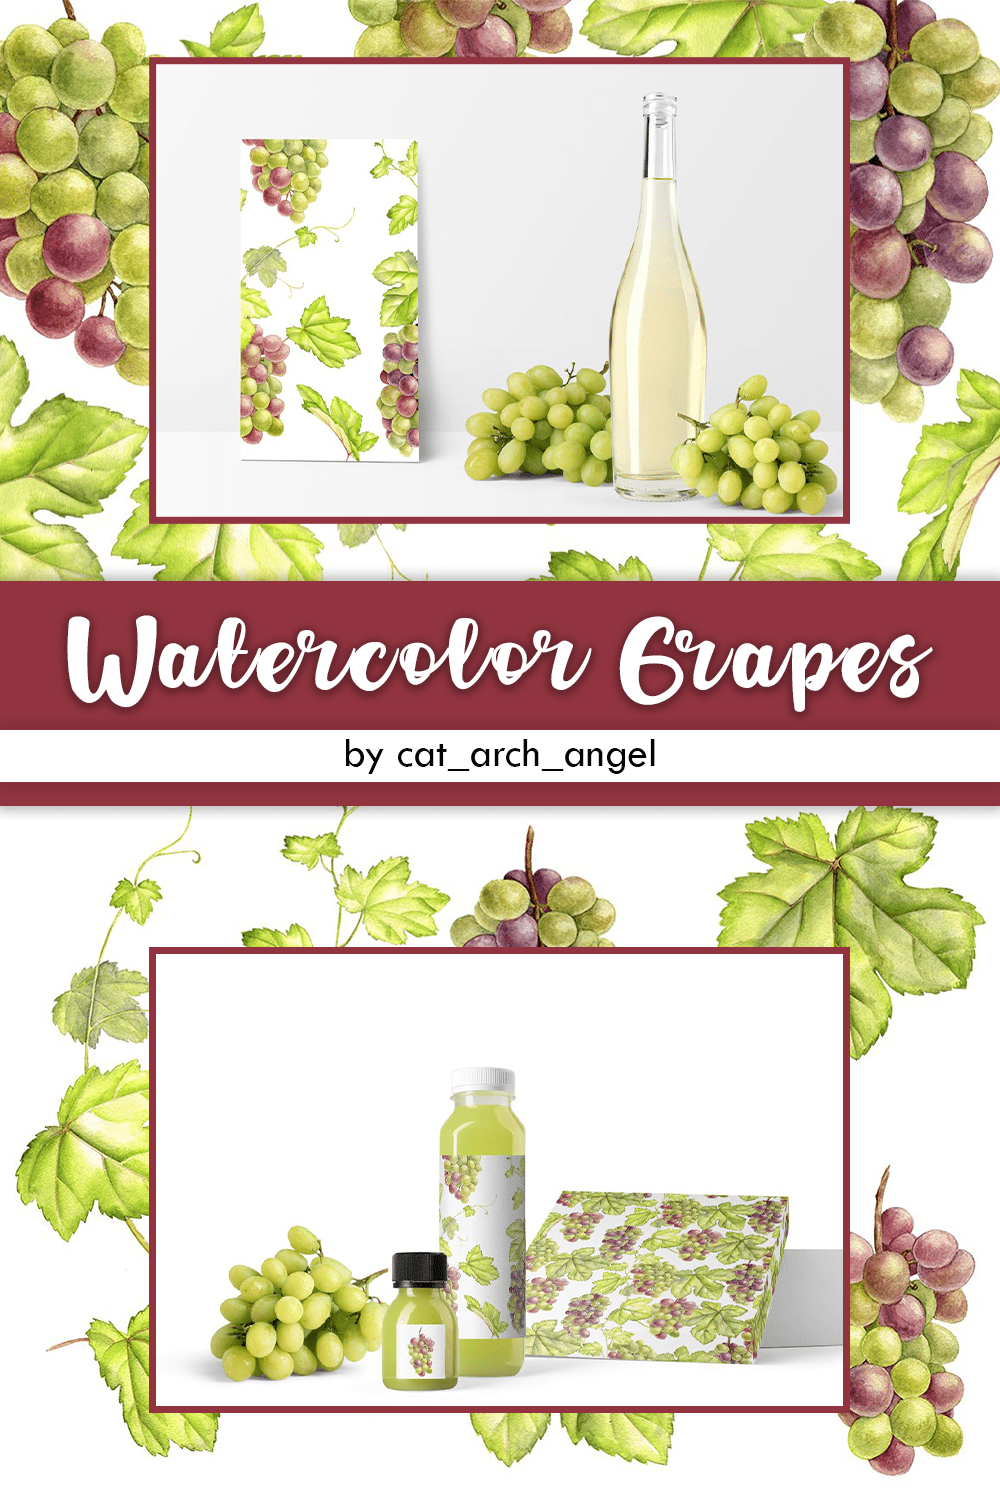 Watercolor grapes - pinterest image preview.